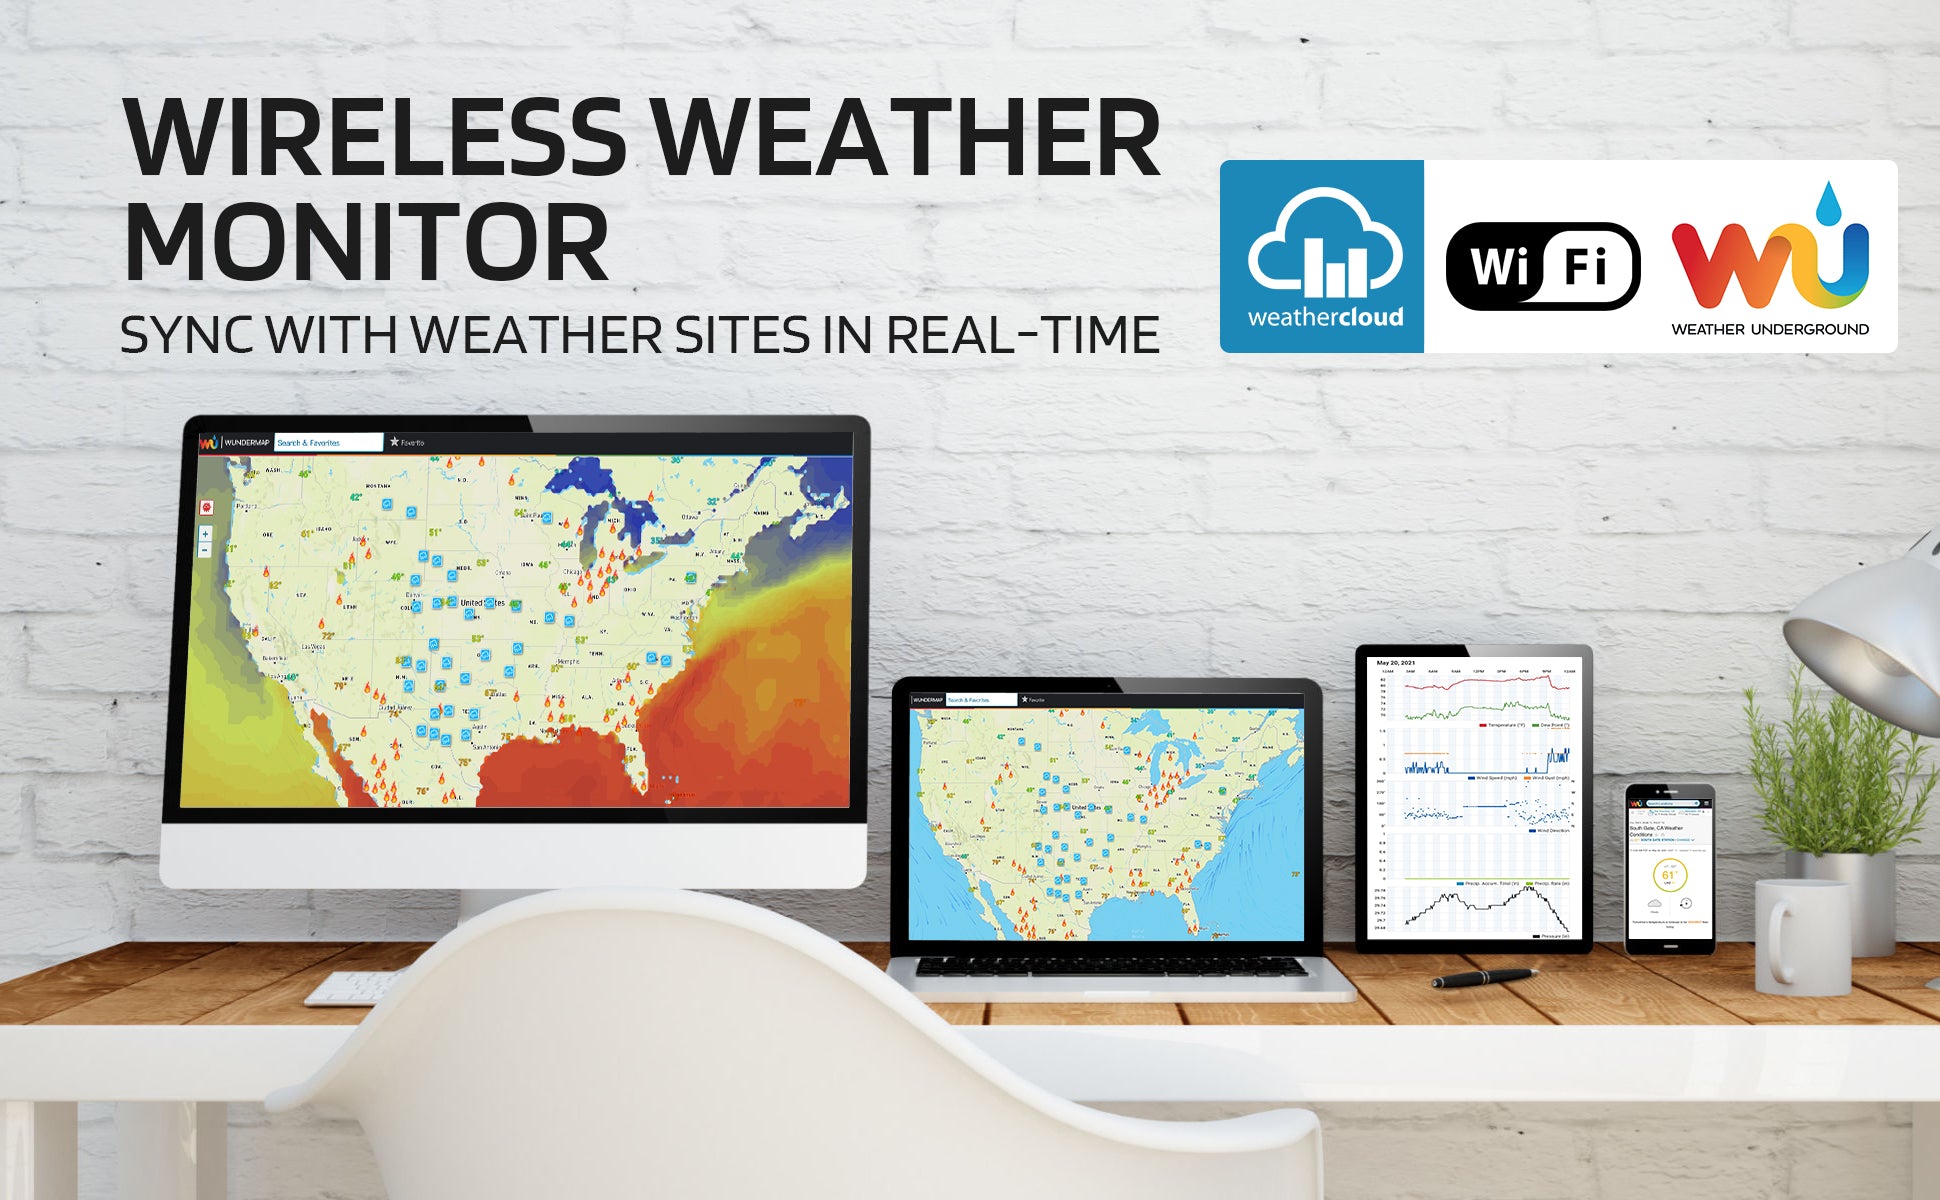 Raddy WF-100C 14-IN-1 Weather Stations Wireless Indoor Outdoor